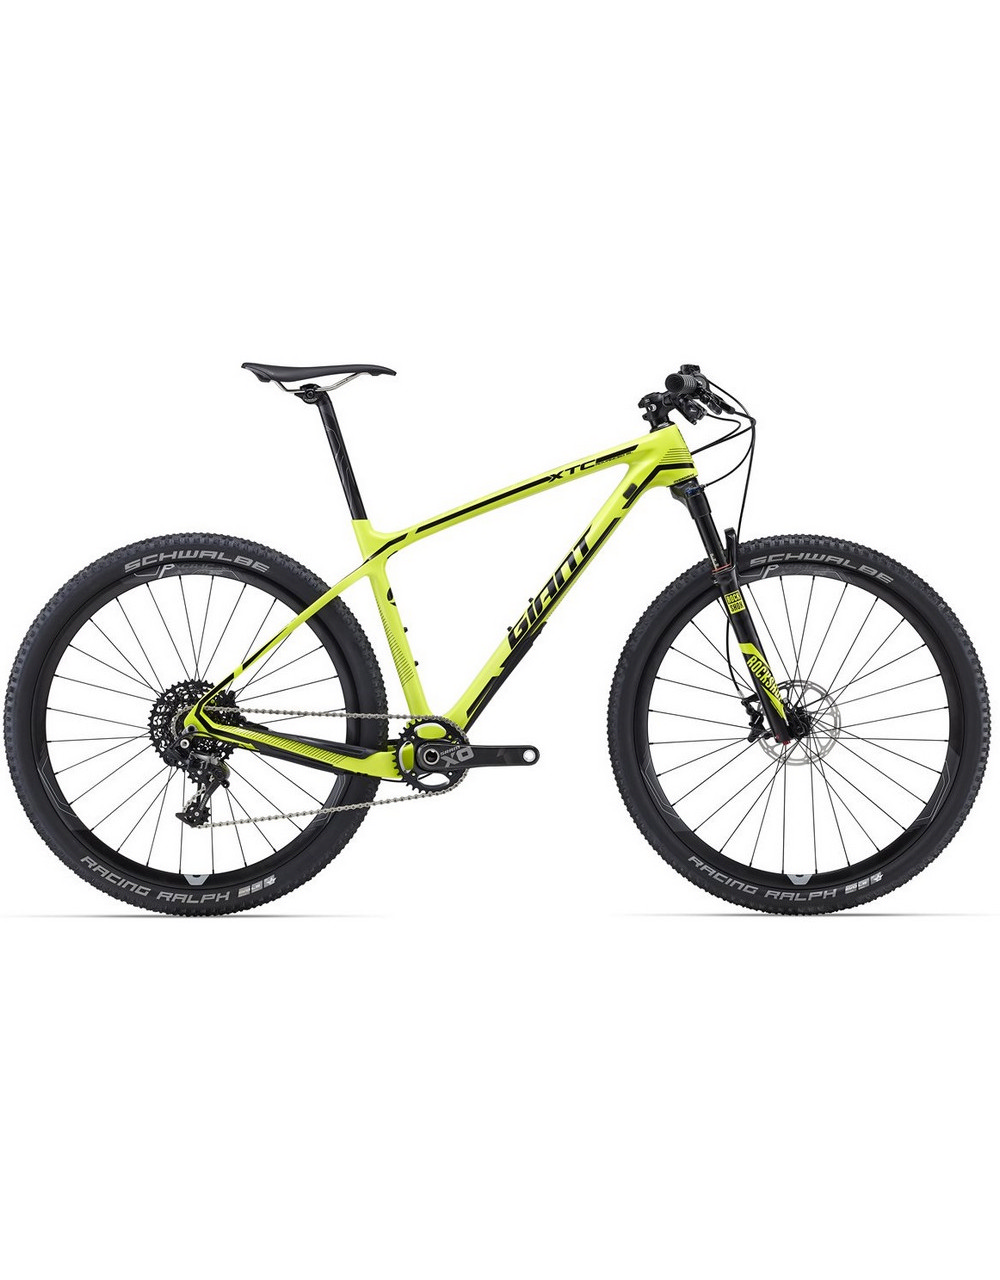 GIANT Велосипед XTC ADVANCED SL 1 27.5" 2016 Артикул: 6003371